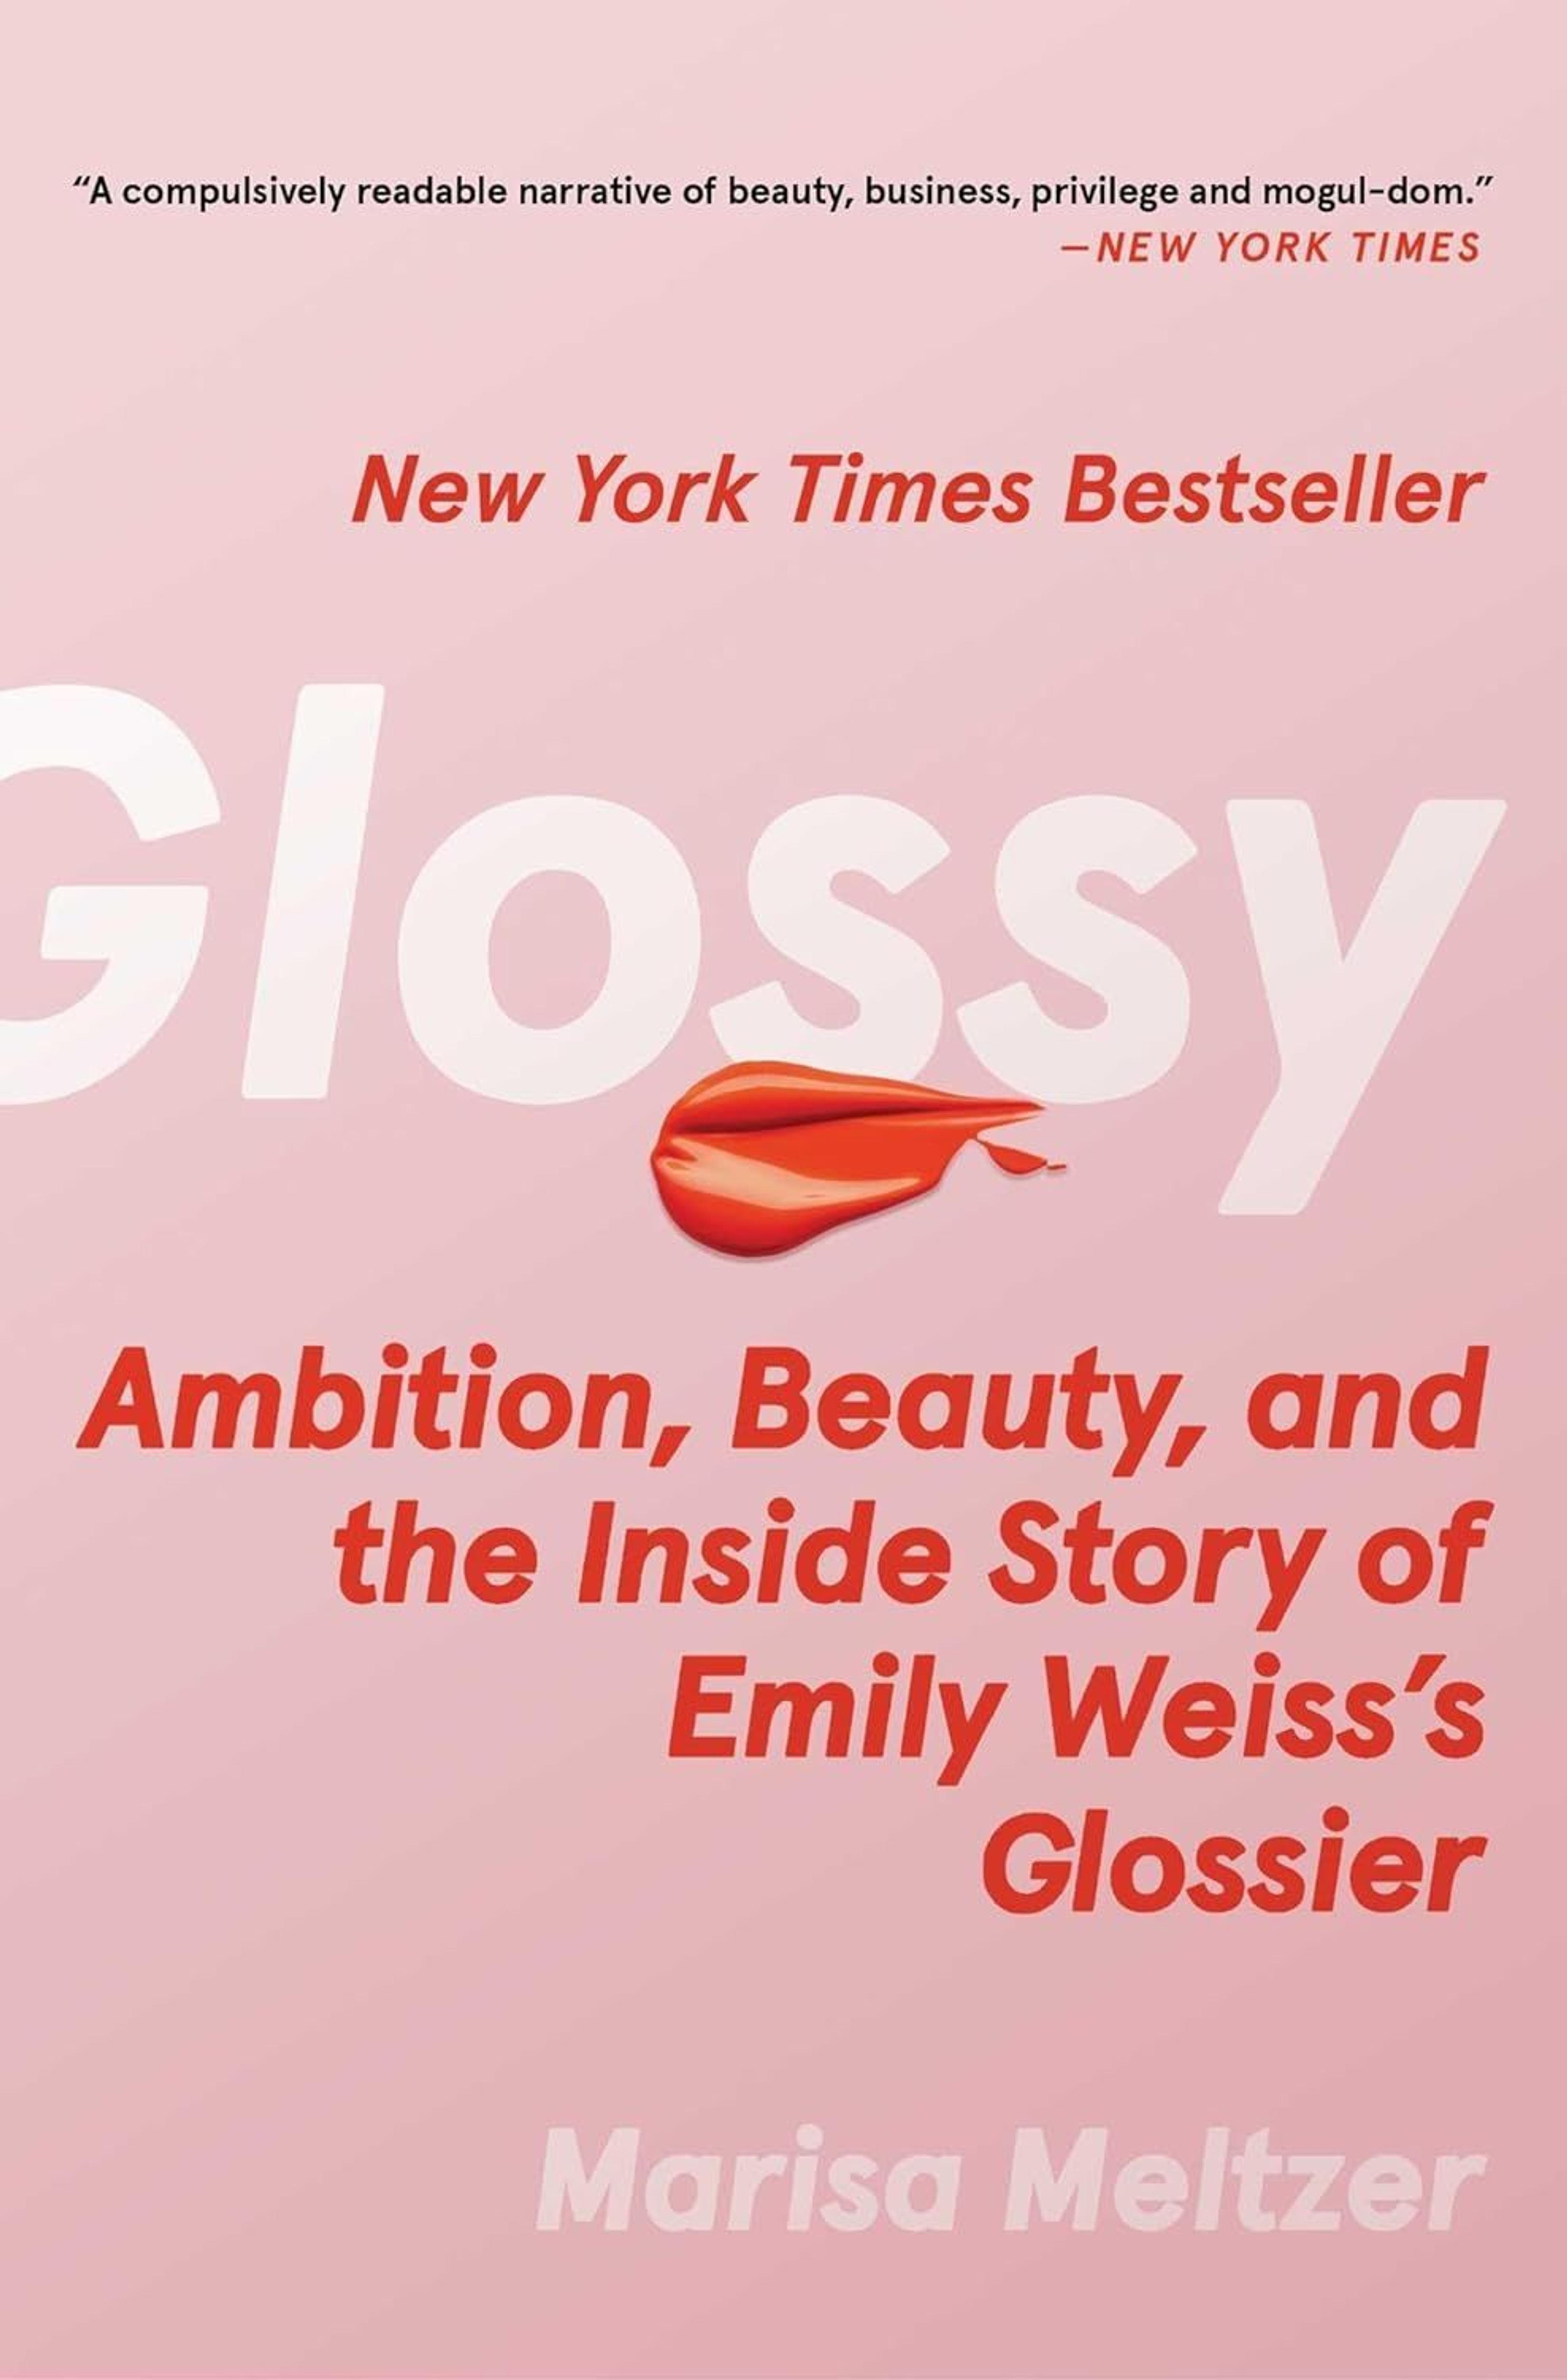 Gaslight, Gatekeep, Glossier: On Marisa Meltzer’s “Glossy”